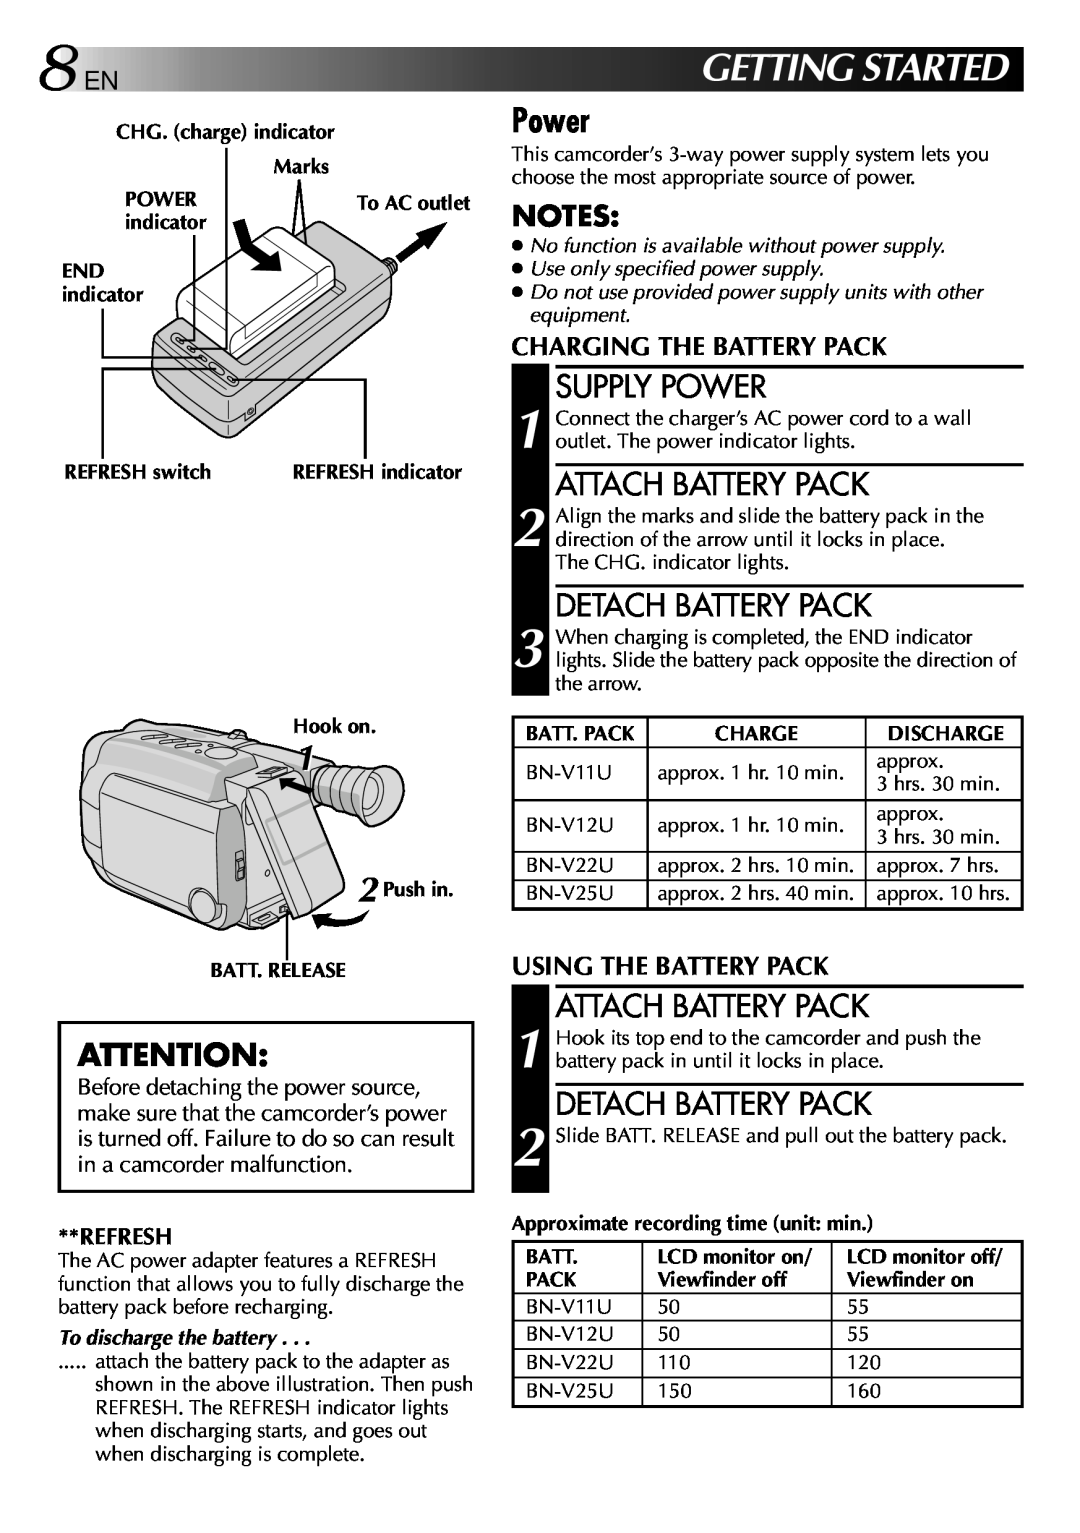 JVC GR-AXM22UM manual Gettingstarted, Supply Power, Attach Battery Pack, Detach Battery Pack, Charging The Battery Pack 